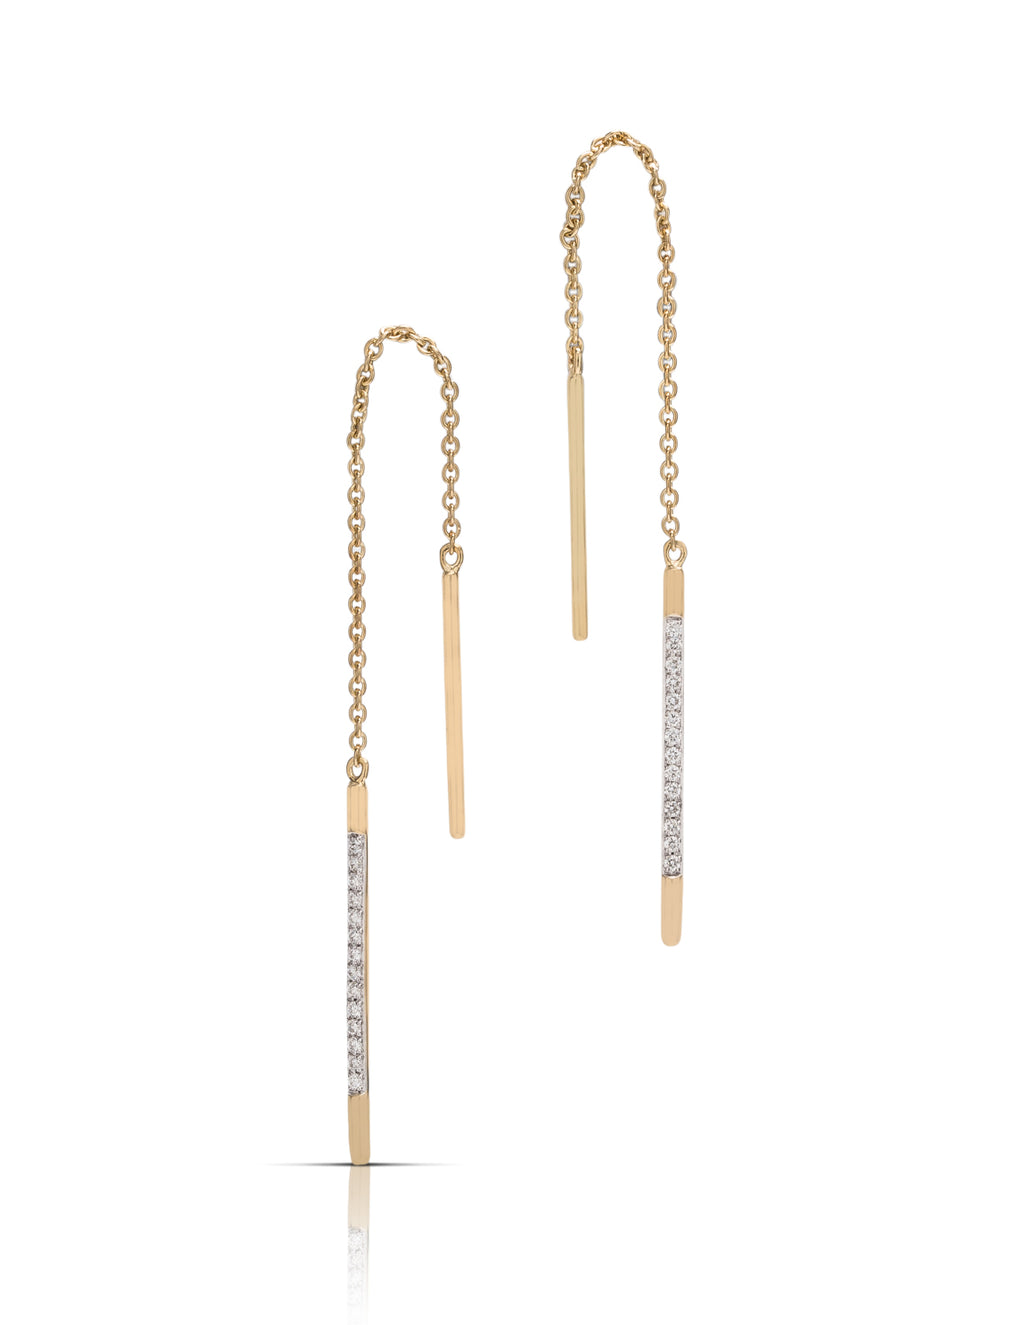 Thread Through Yellow Gold and Diamond Earrings - Charles Koll Jewellers